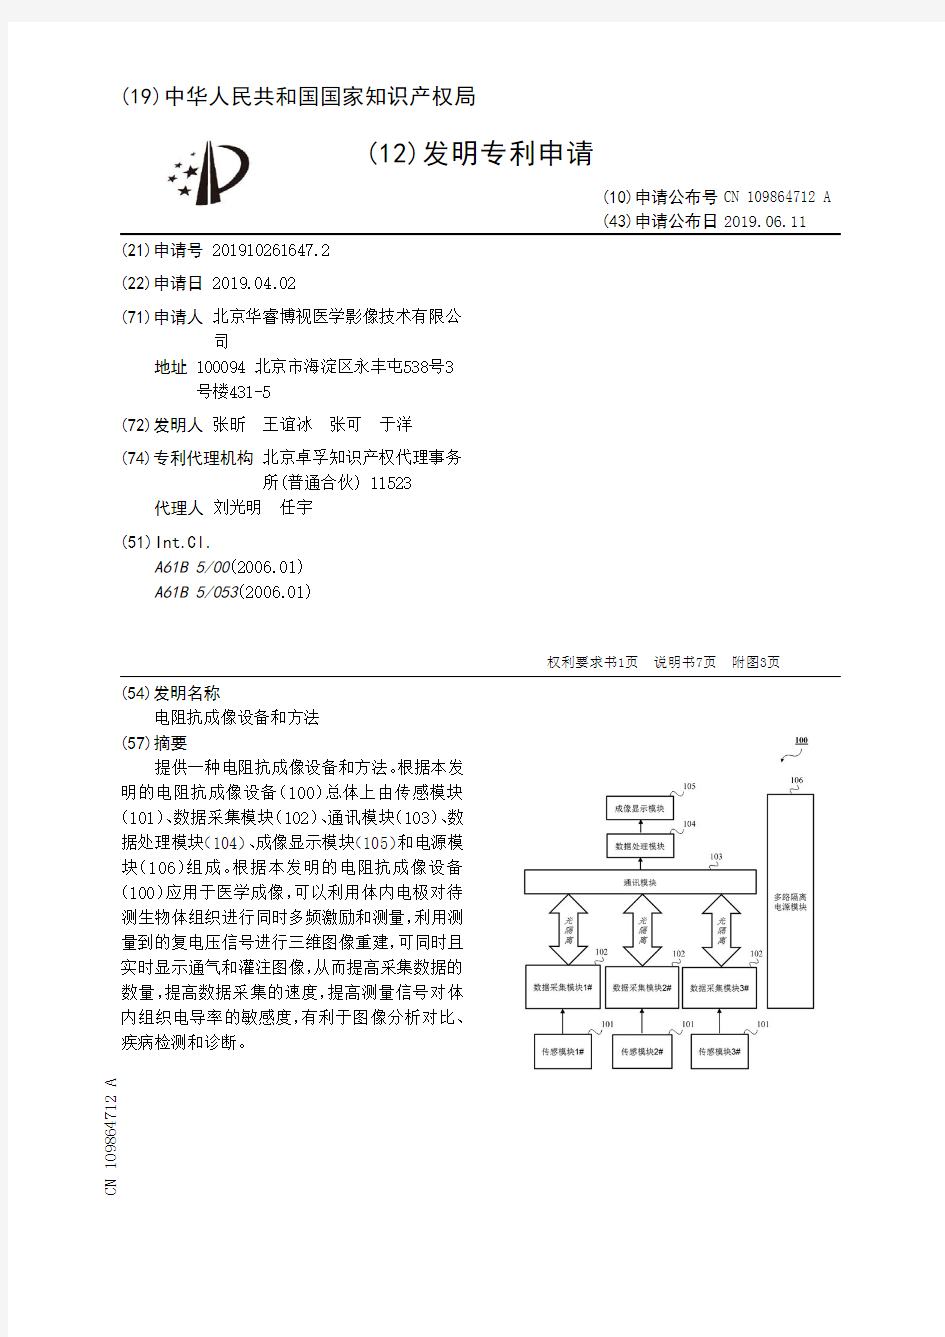 【CN109864712A】电阻抗成像设备和方法【专利】